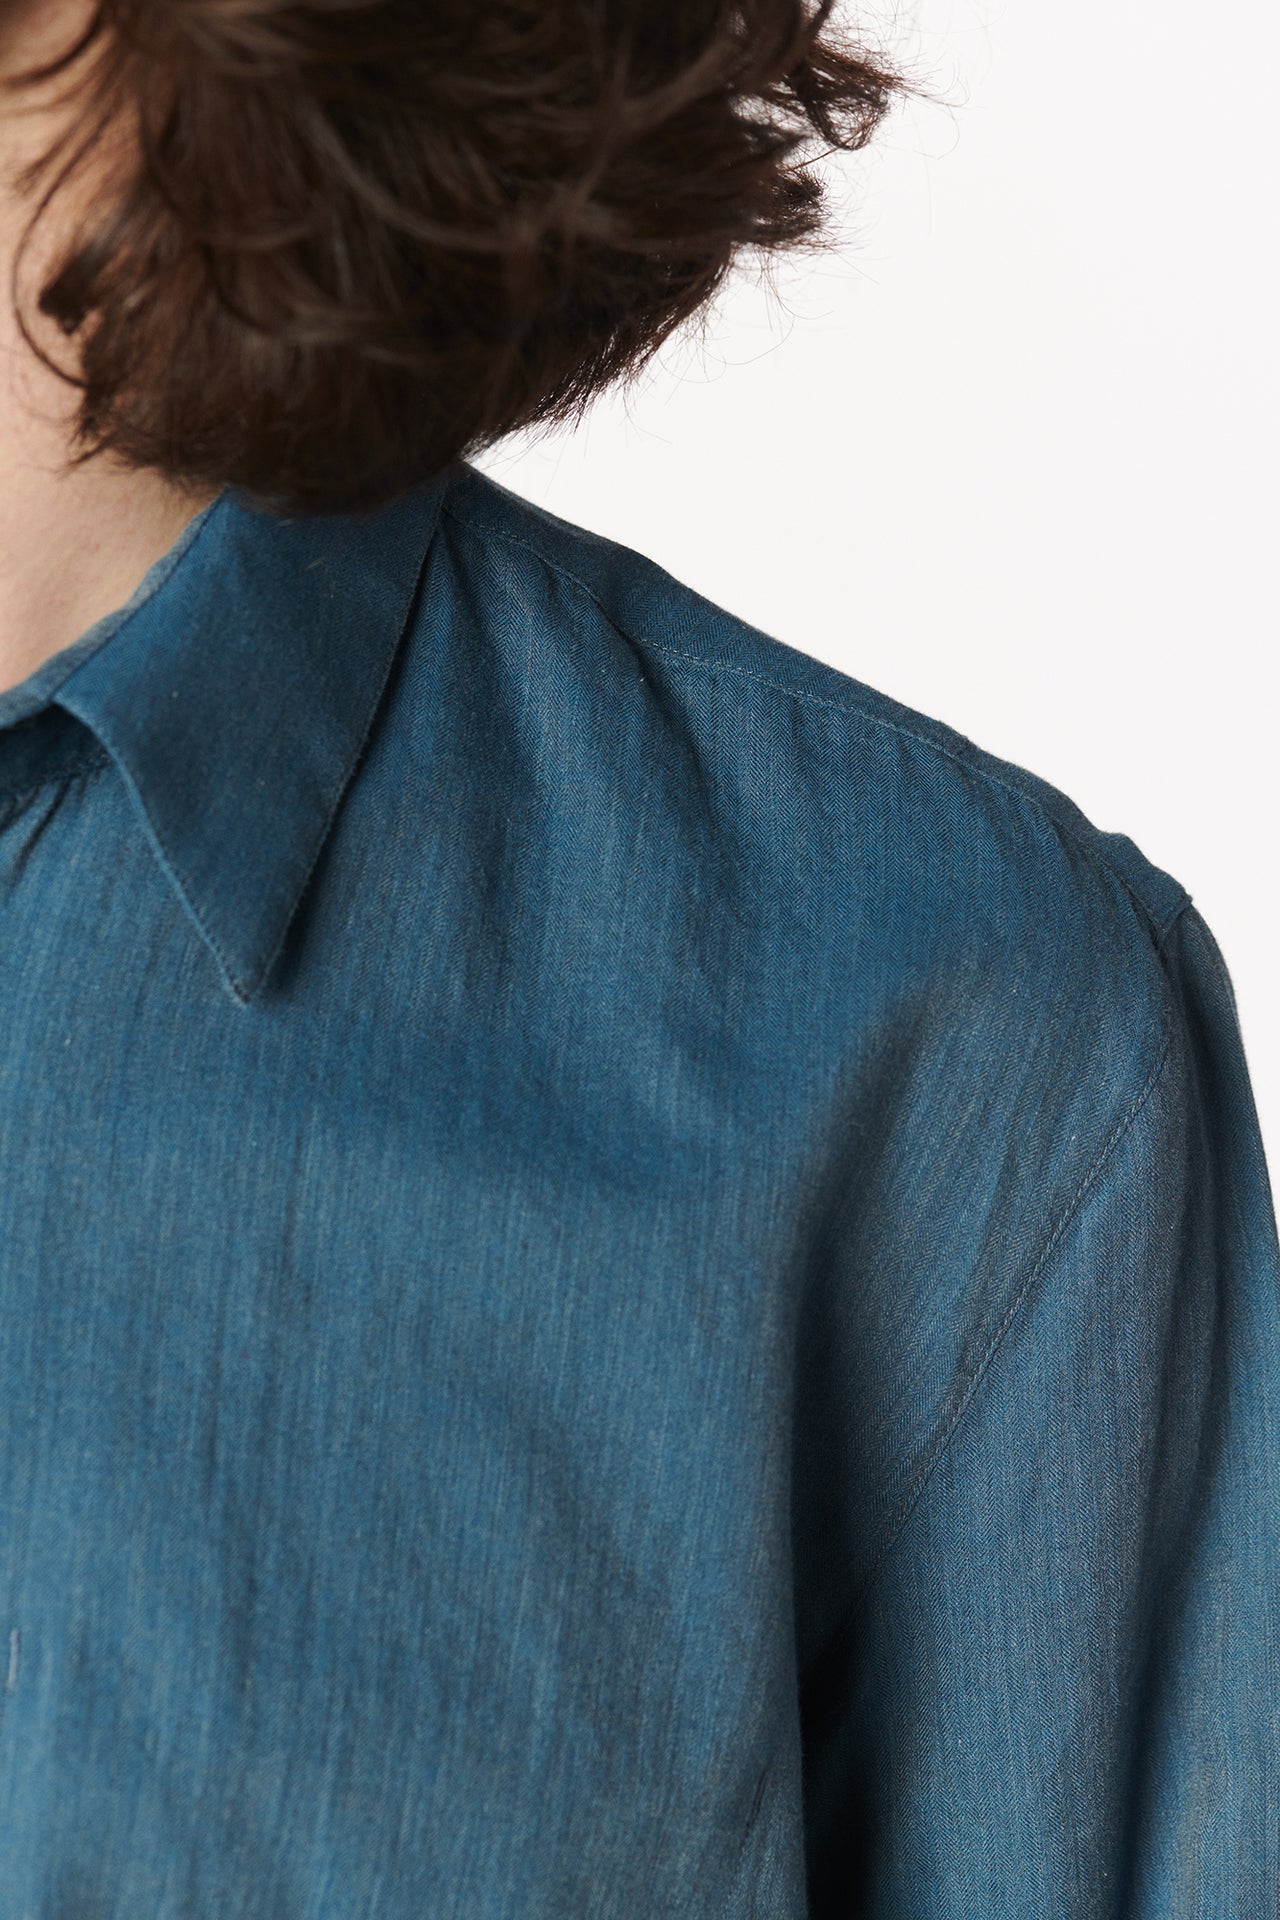 Feel Good Shirt in the Finest Sapphire Blue Fine Herringbone Soft Italian Cotton Flannel